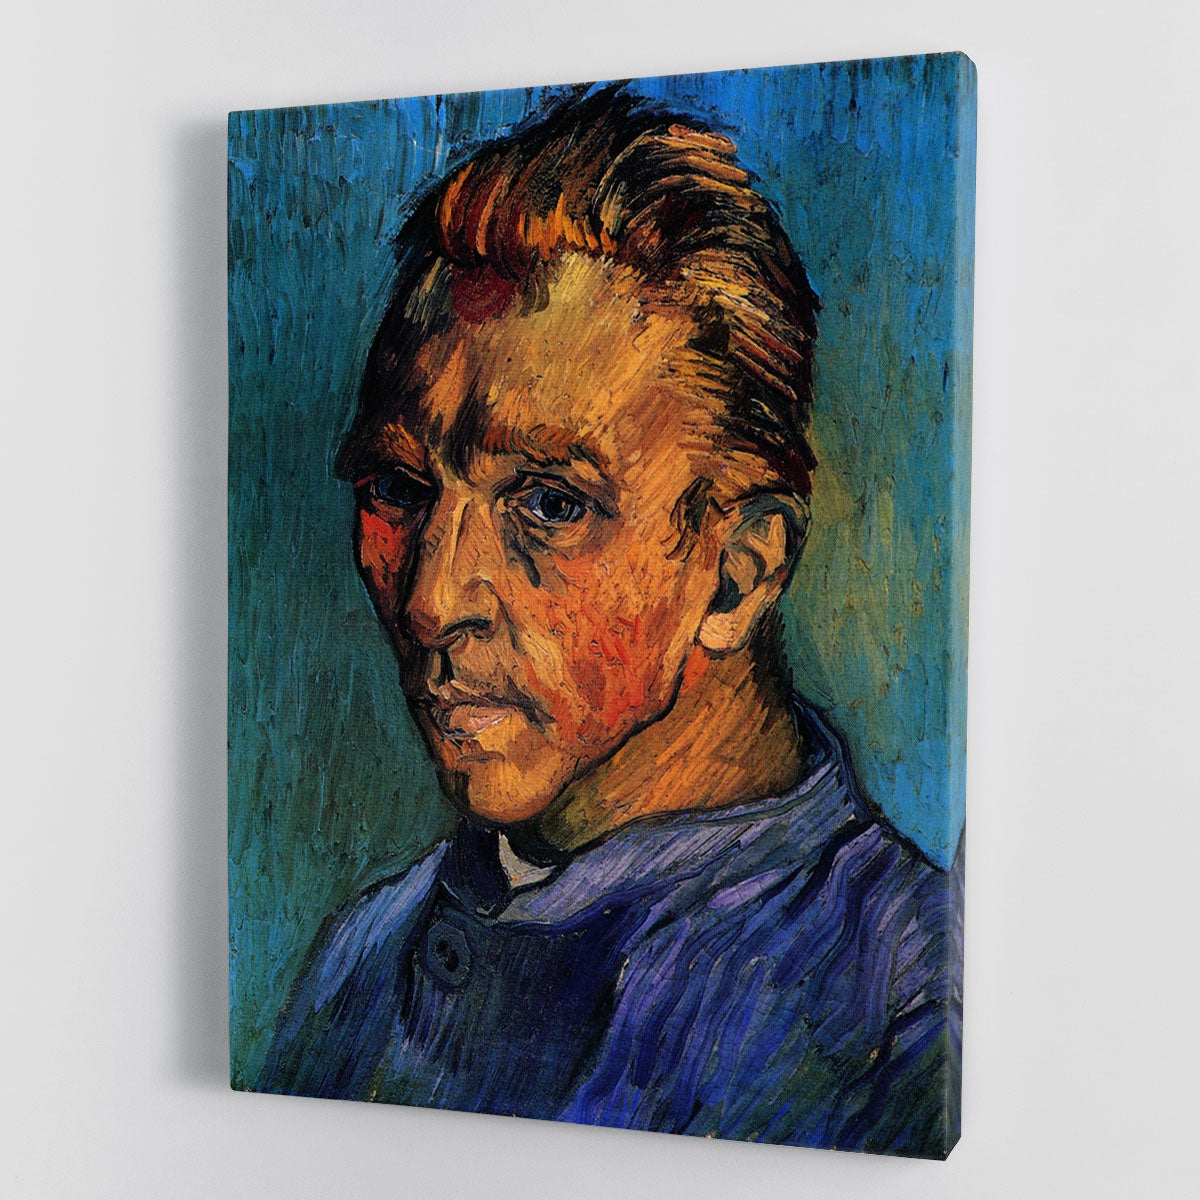 Self-Portrait by Van Gogh Canvas Print or Poster - Canvas Art Rocks - 1